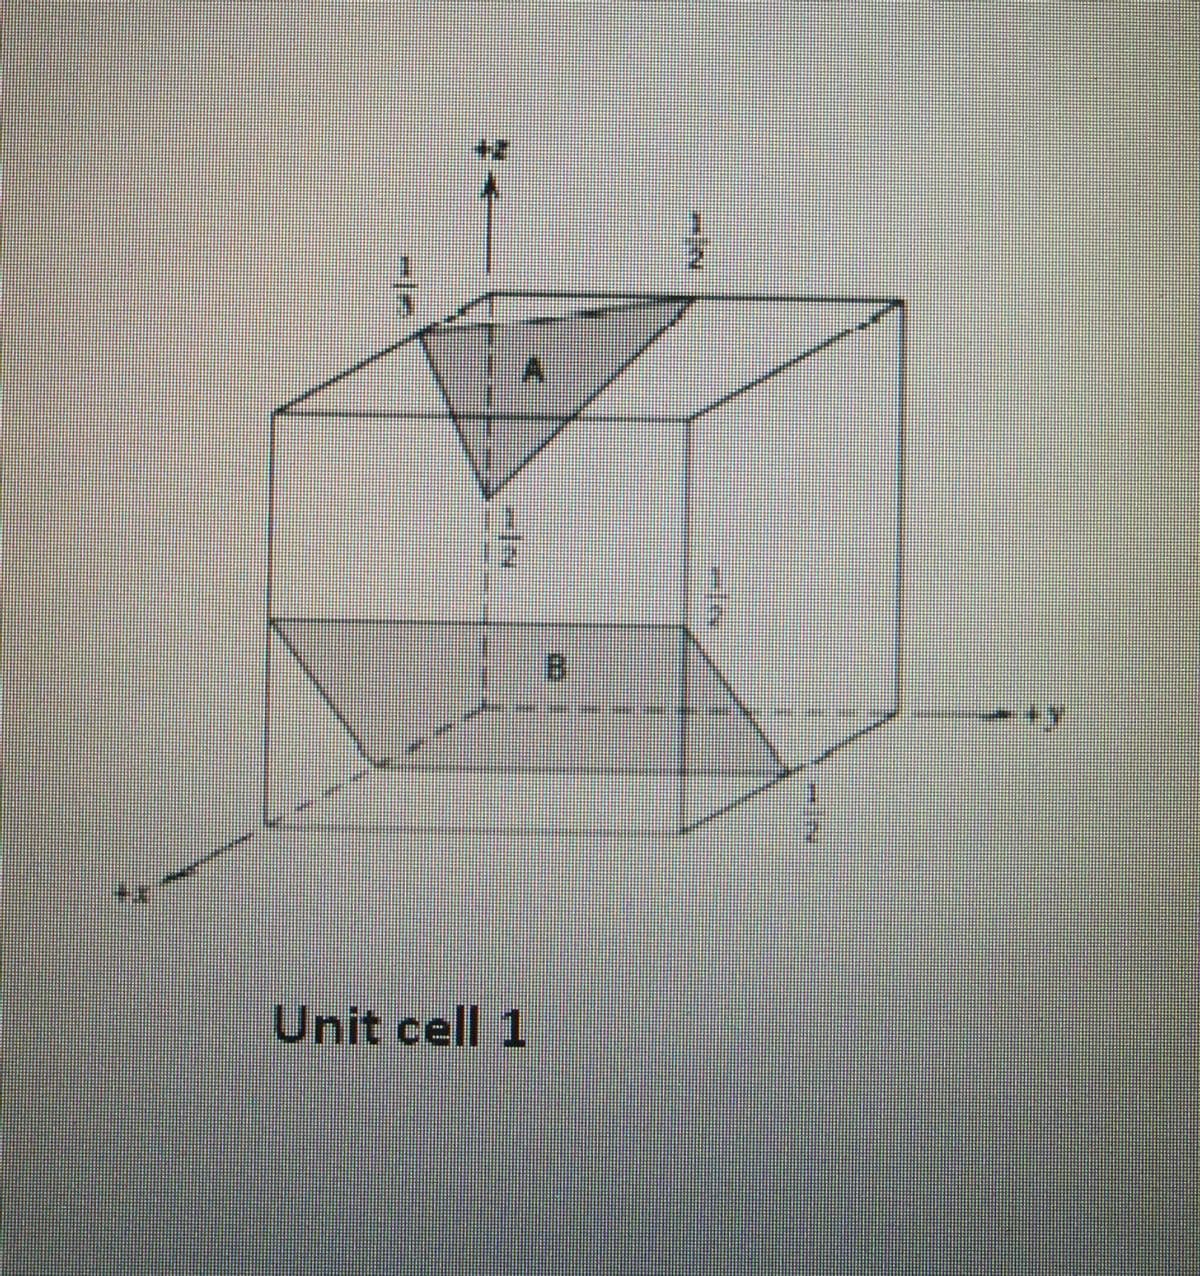 Unit cell 1
